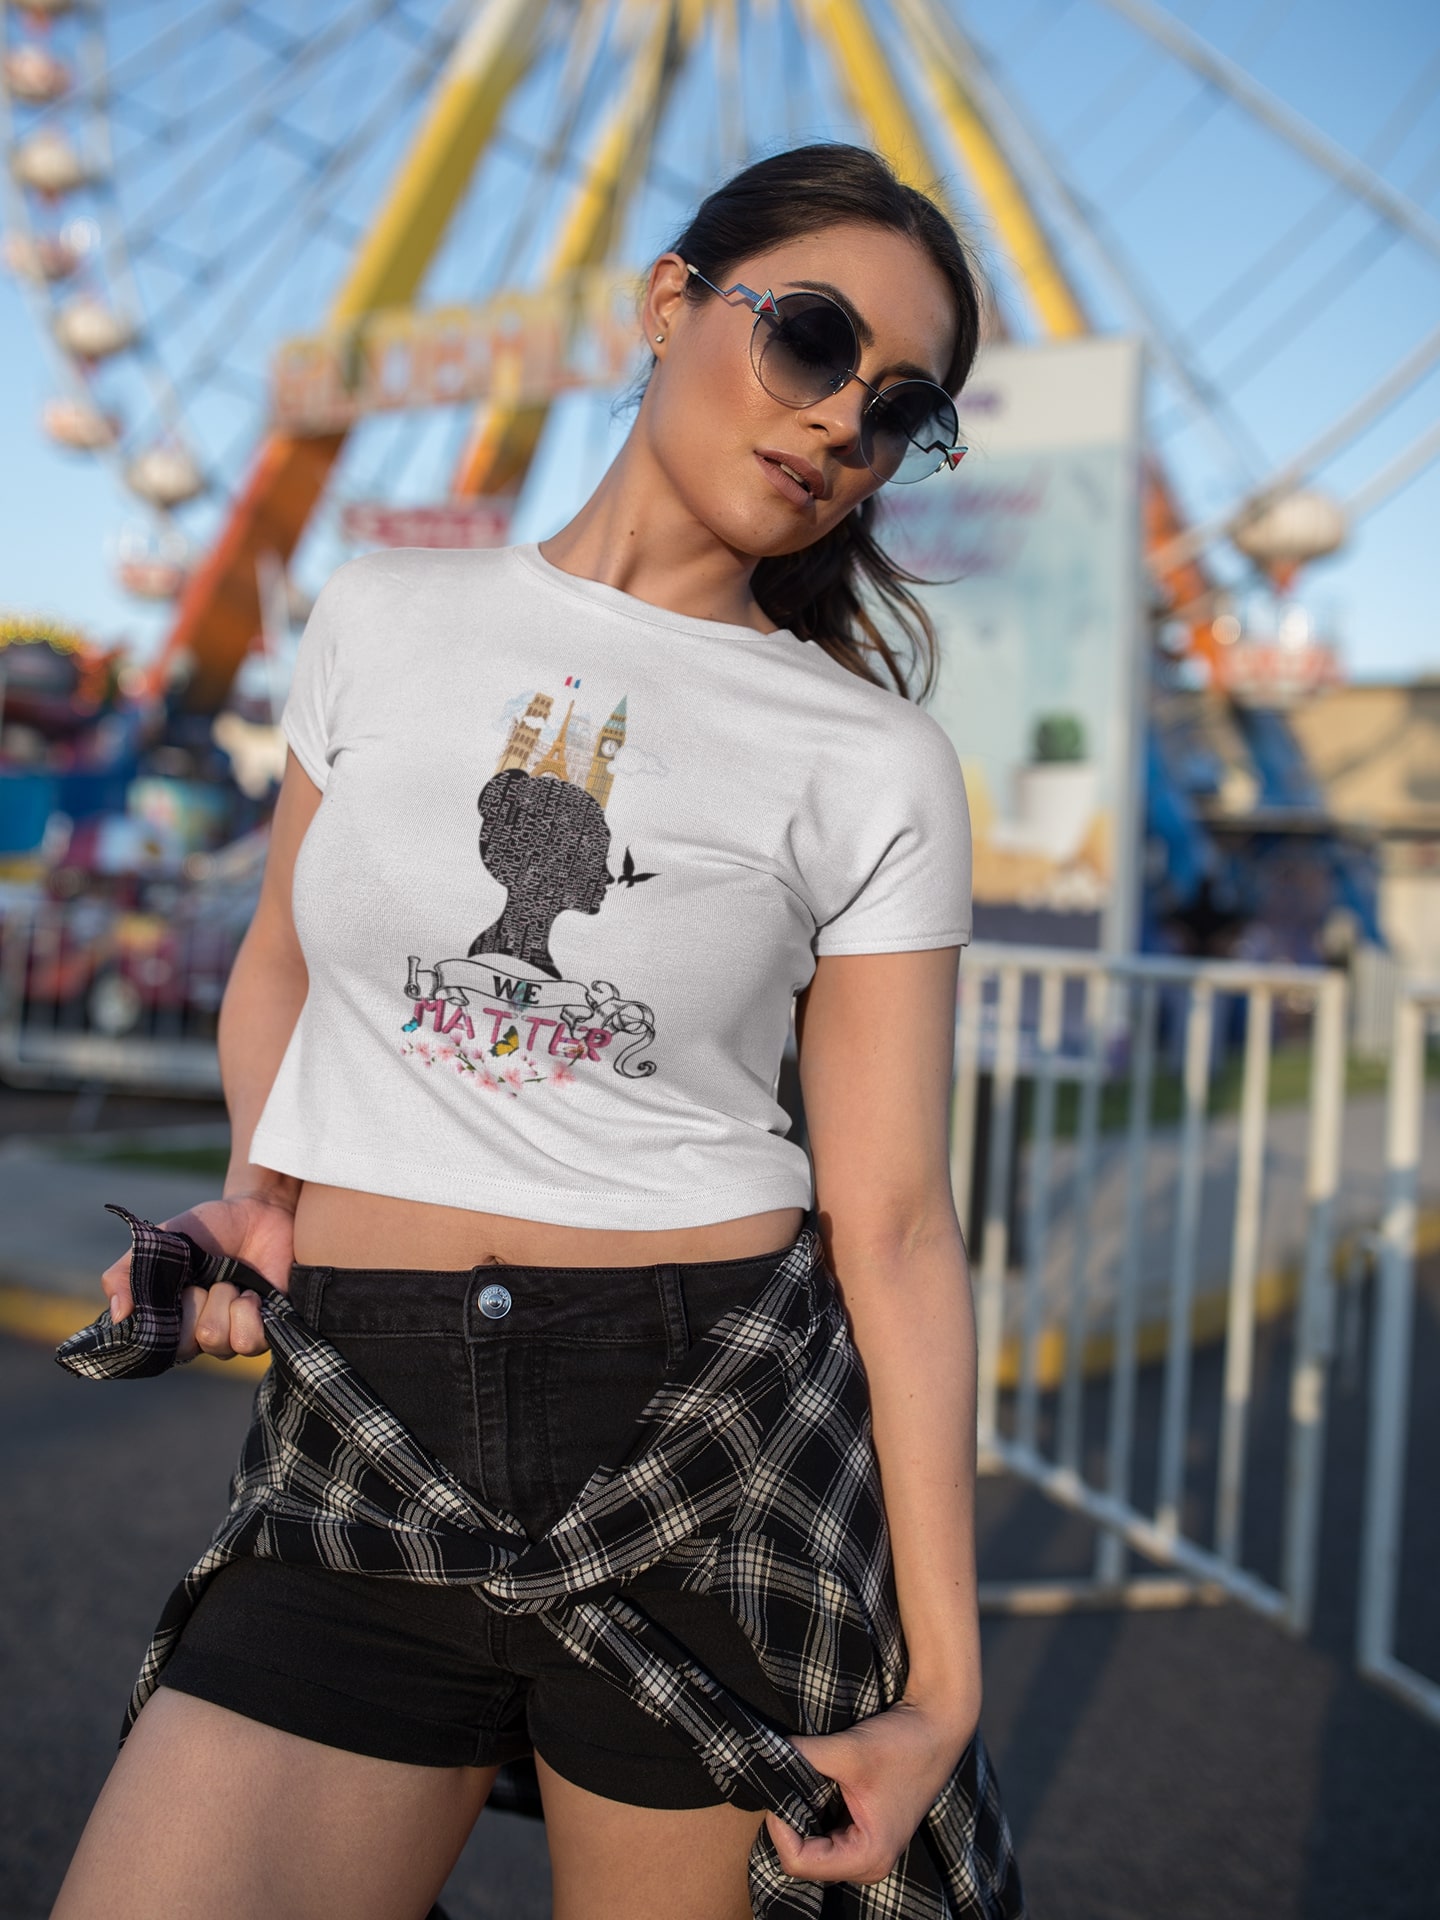 white woman wearing a crop top t shirt mockup at an amusement park a19429 391